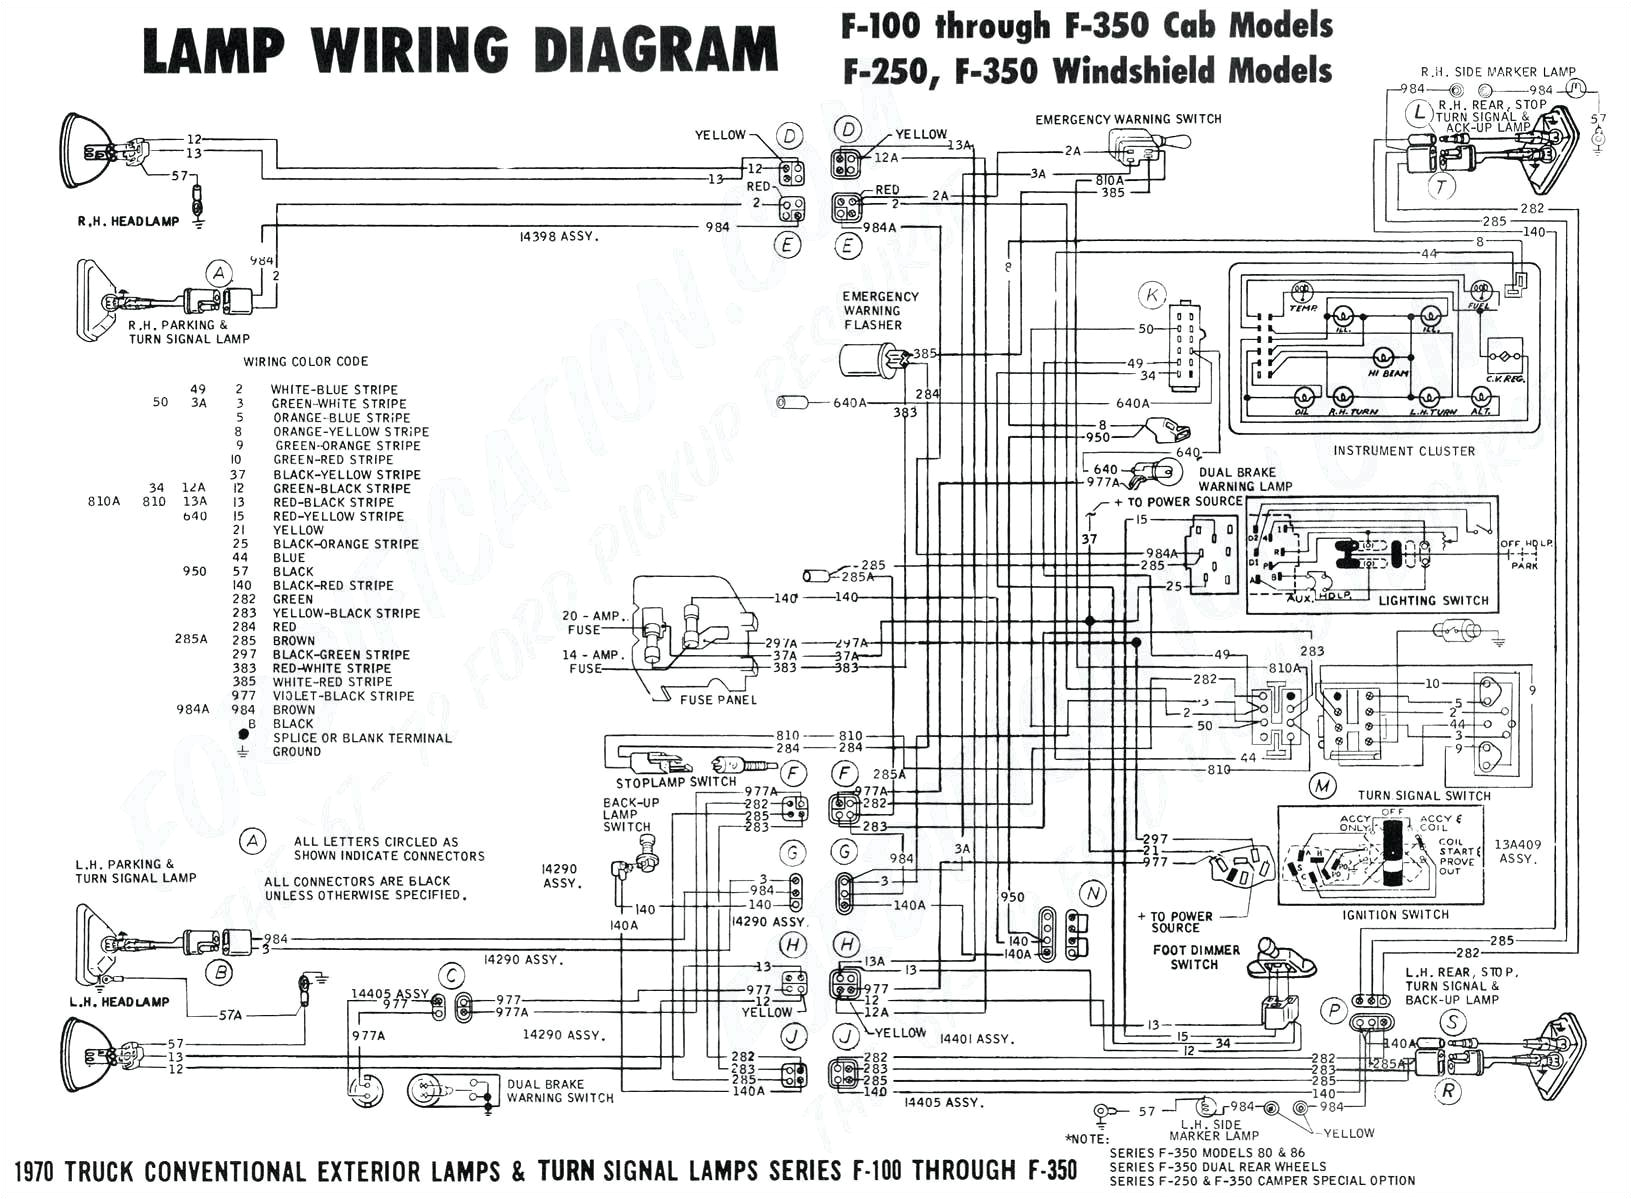 69 pontiac starter wiring diagram free picture wiring diagrams long 1969 buick starter wiring wiring diagram